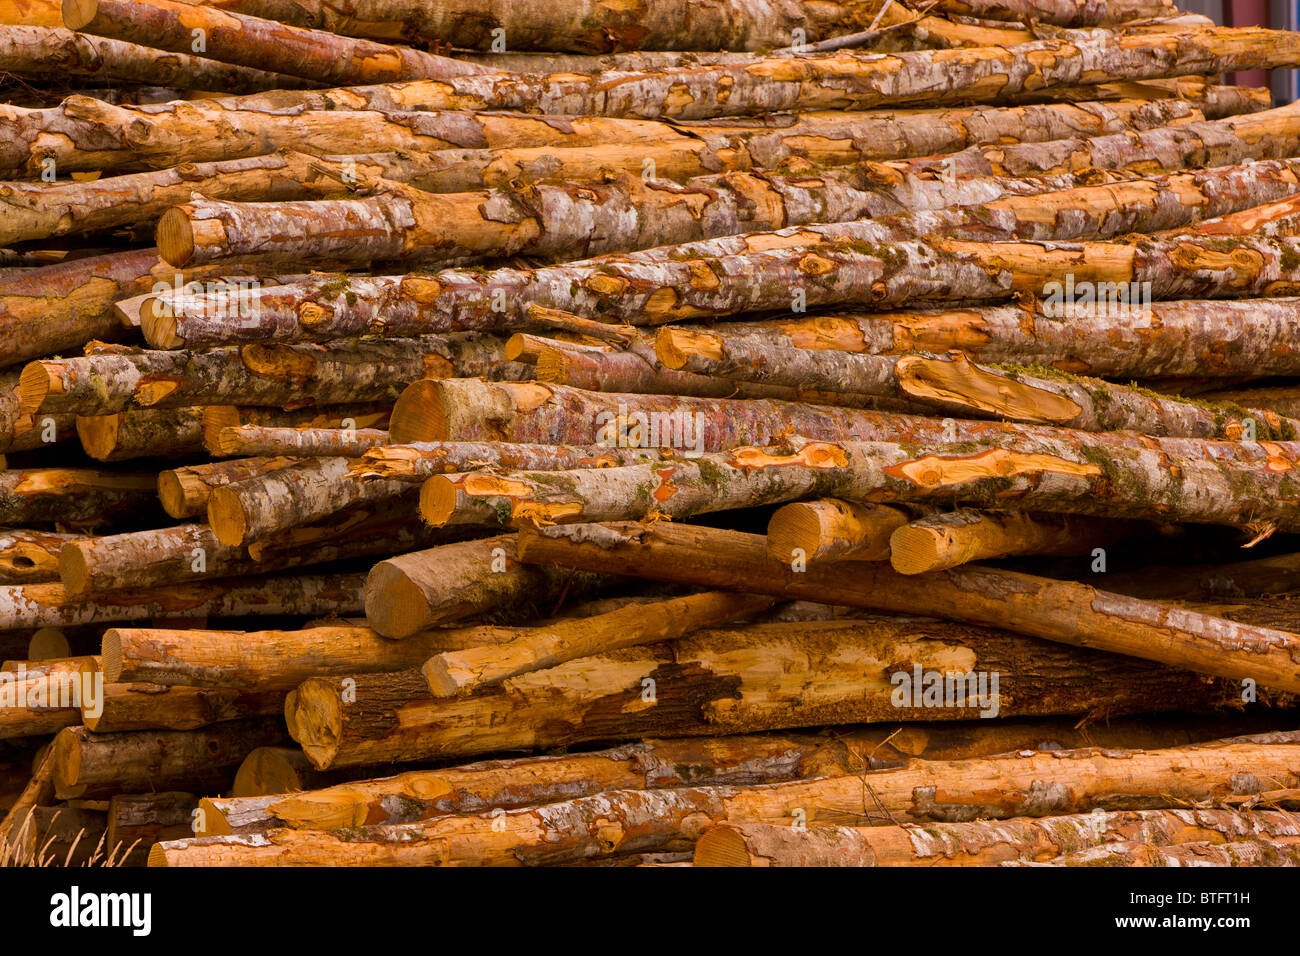 COOS BAY, OREGON, USA - Logs stacked at Weyerhaeuser lumber mill. Stock Photo